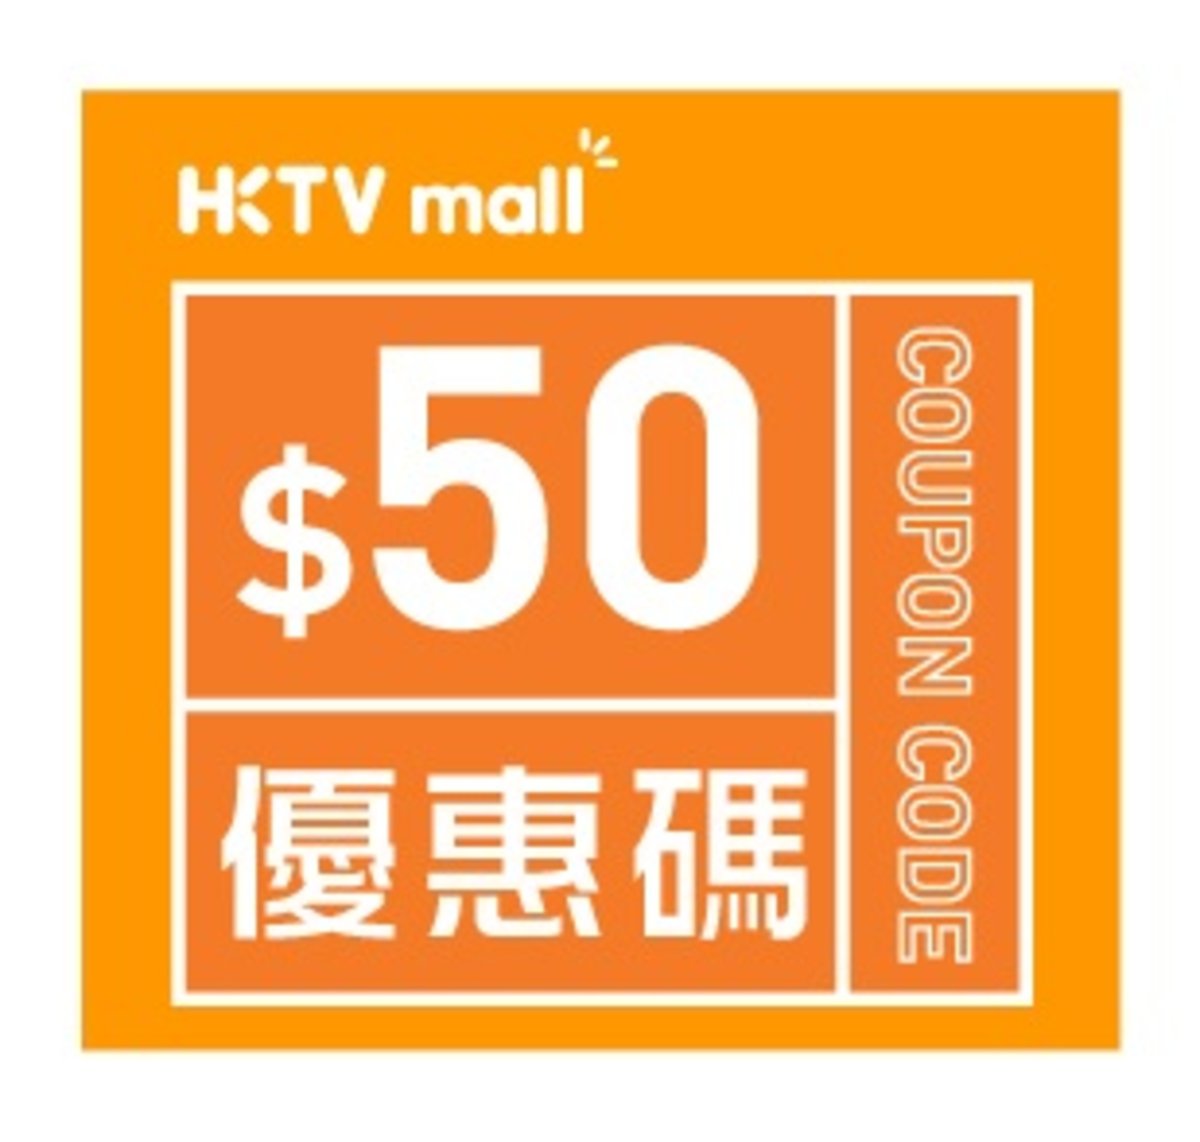 HKTVmall $50 Coupon Code  [Valid: 2020.05.30 - 2020.06.06]